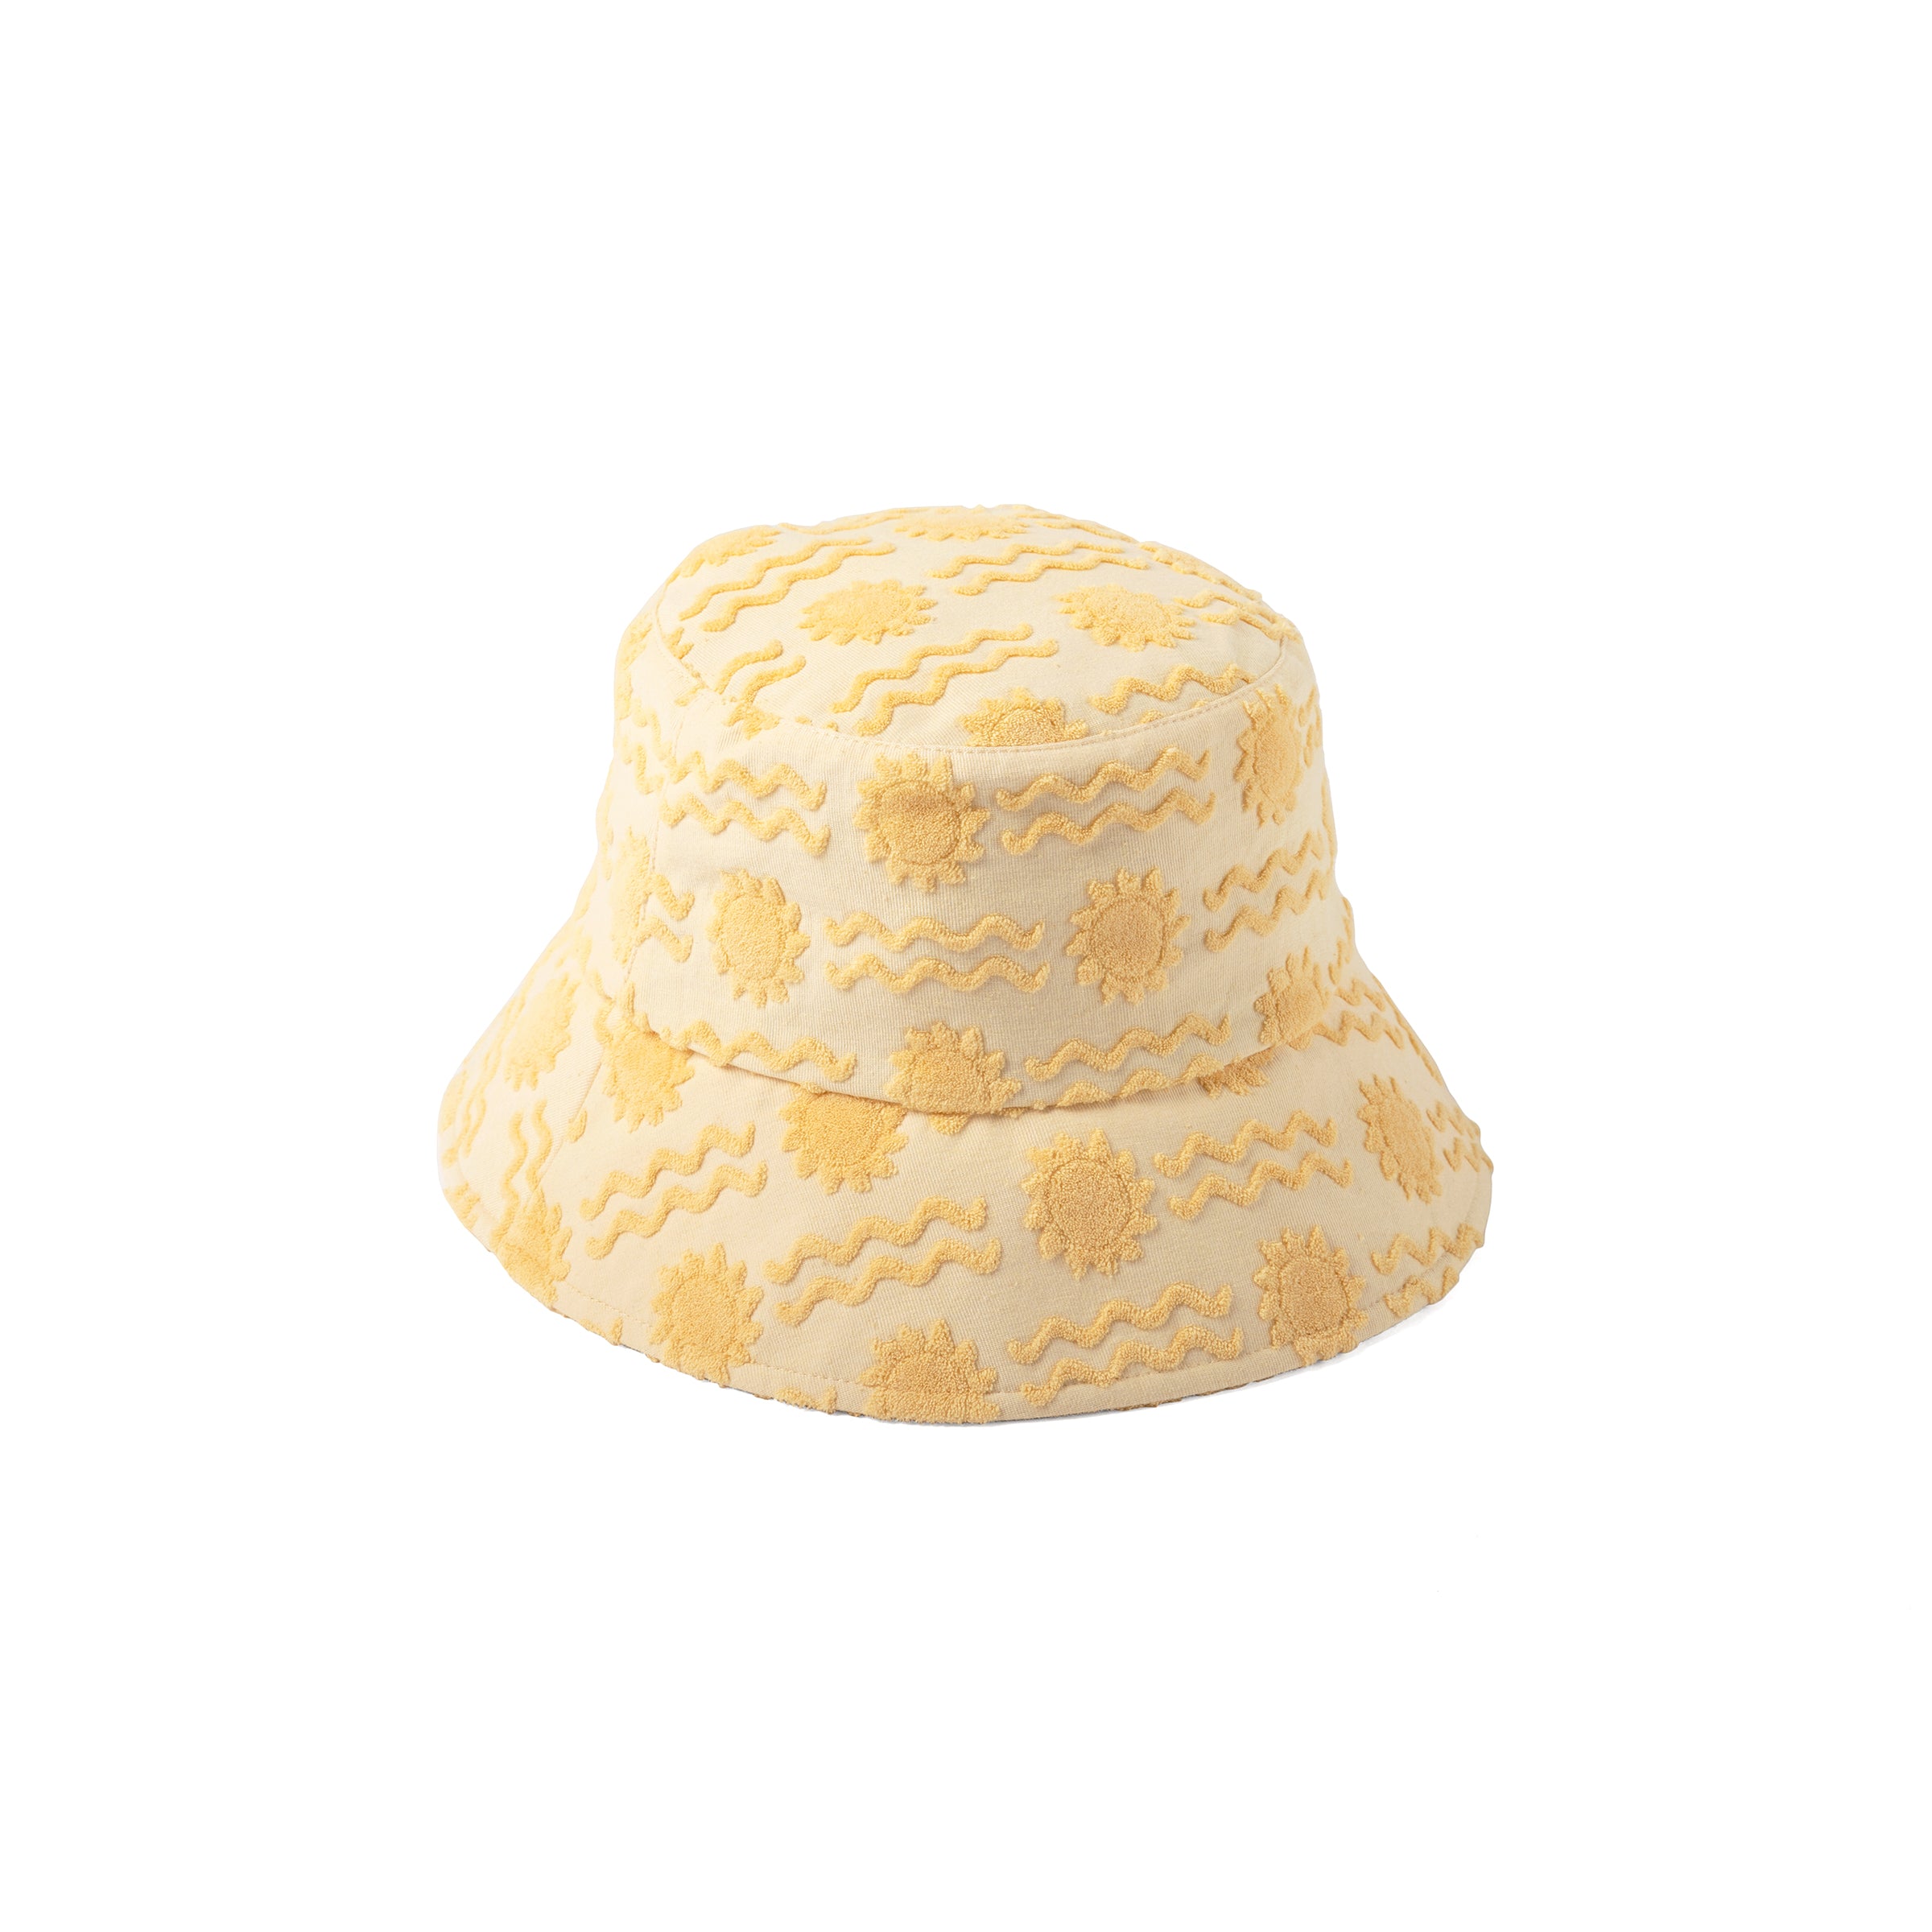 Beieverluck 6 Pieces Washed Cotton Bucket Hats Lightweight Summer